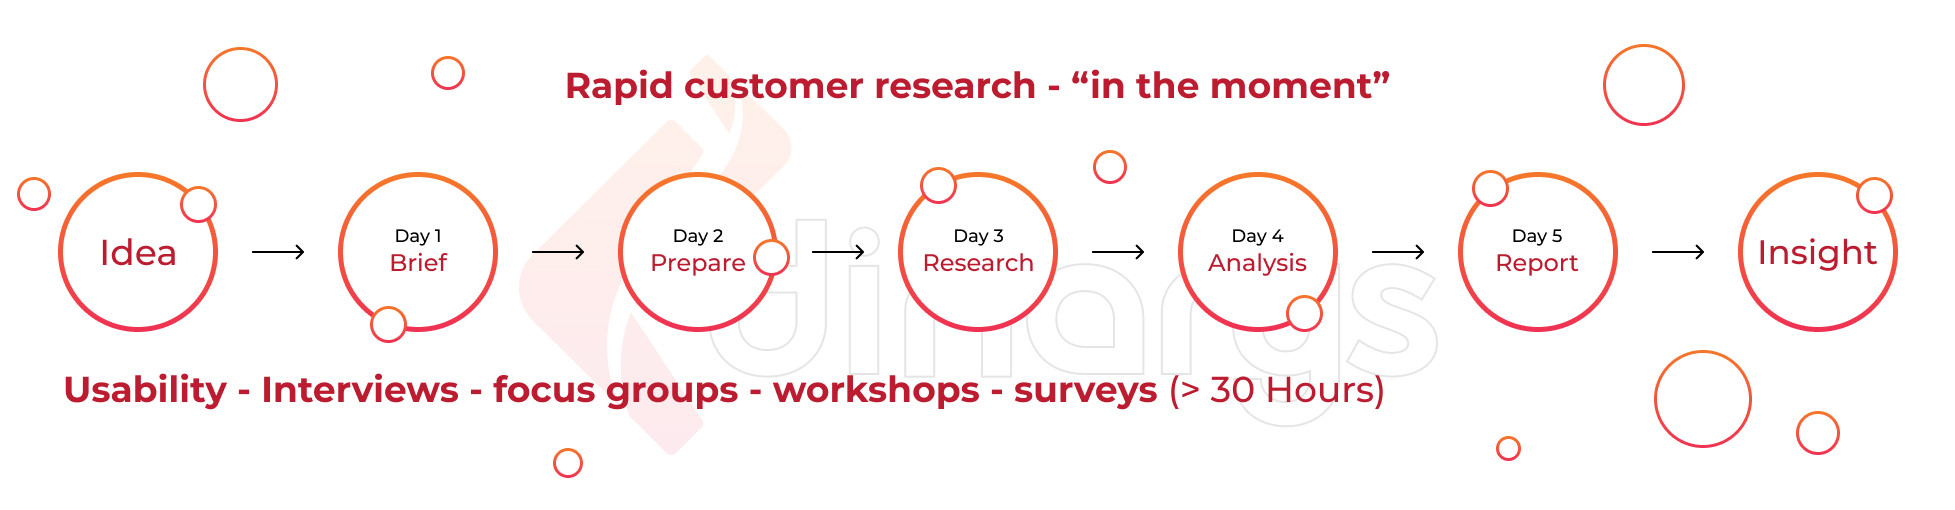 Rapid customer research